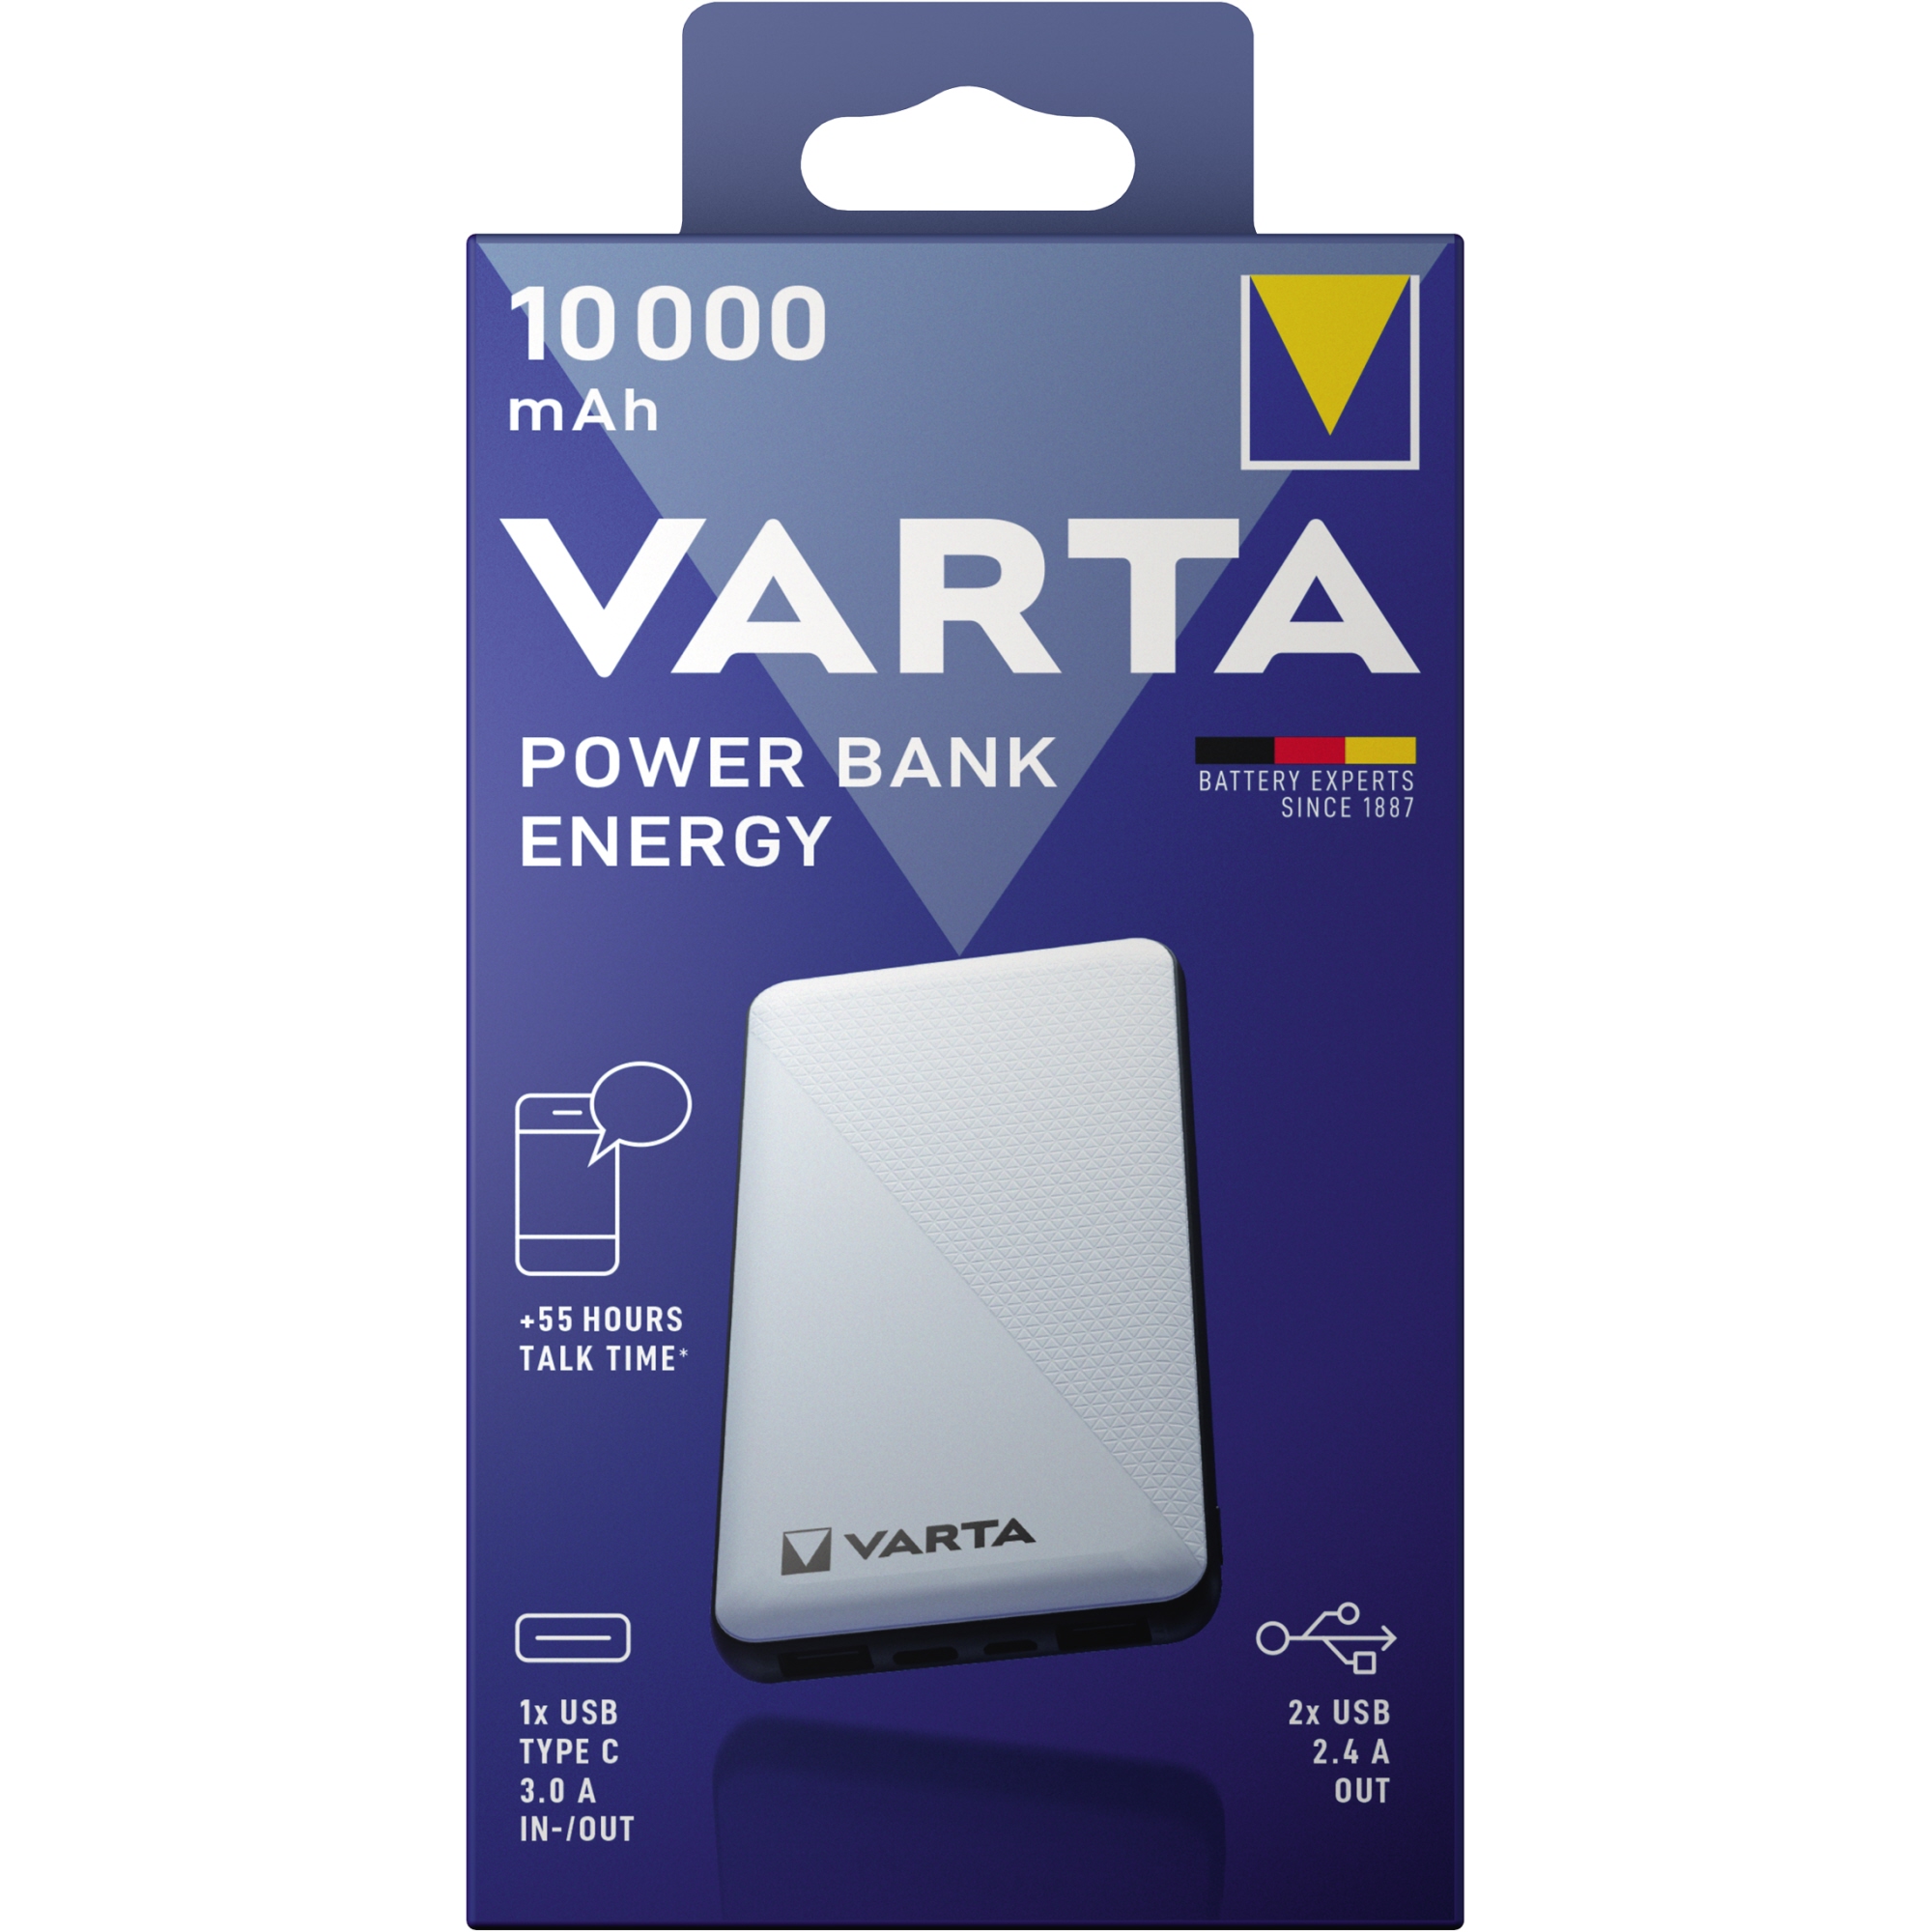 VARTA Powerbank Energy weiß 10000mAh 4USB-Ports Ladekabel 10.000 m